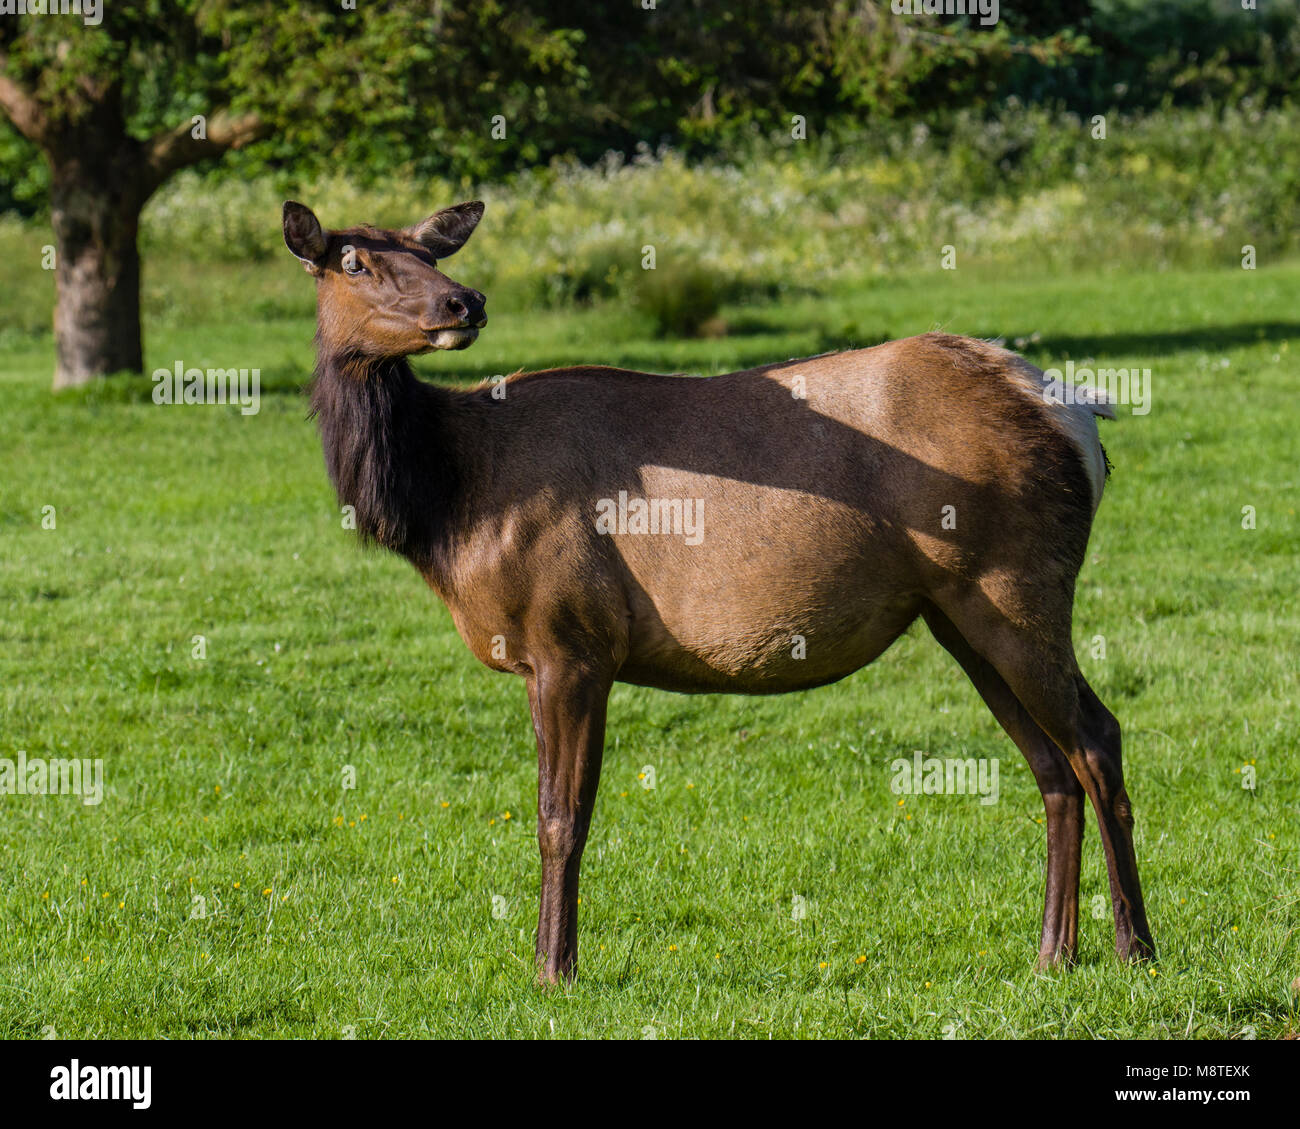 Elk grazing in a grassy lawn near Trinidad, California Stock Photo